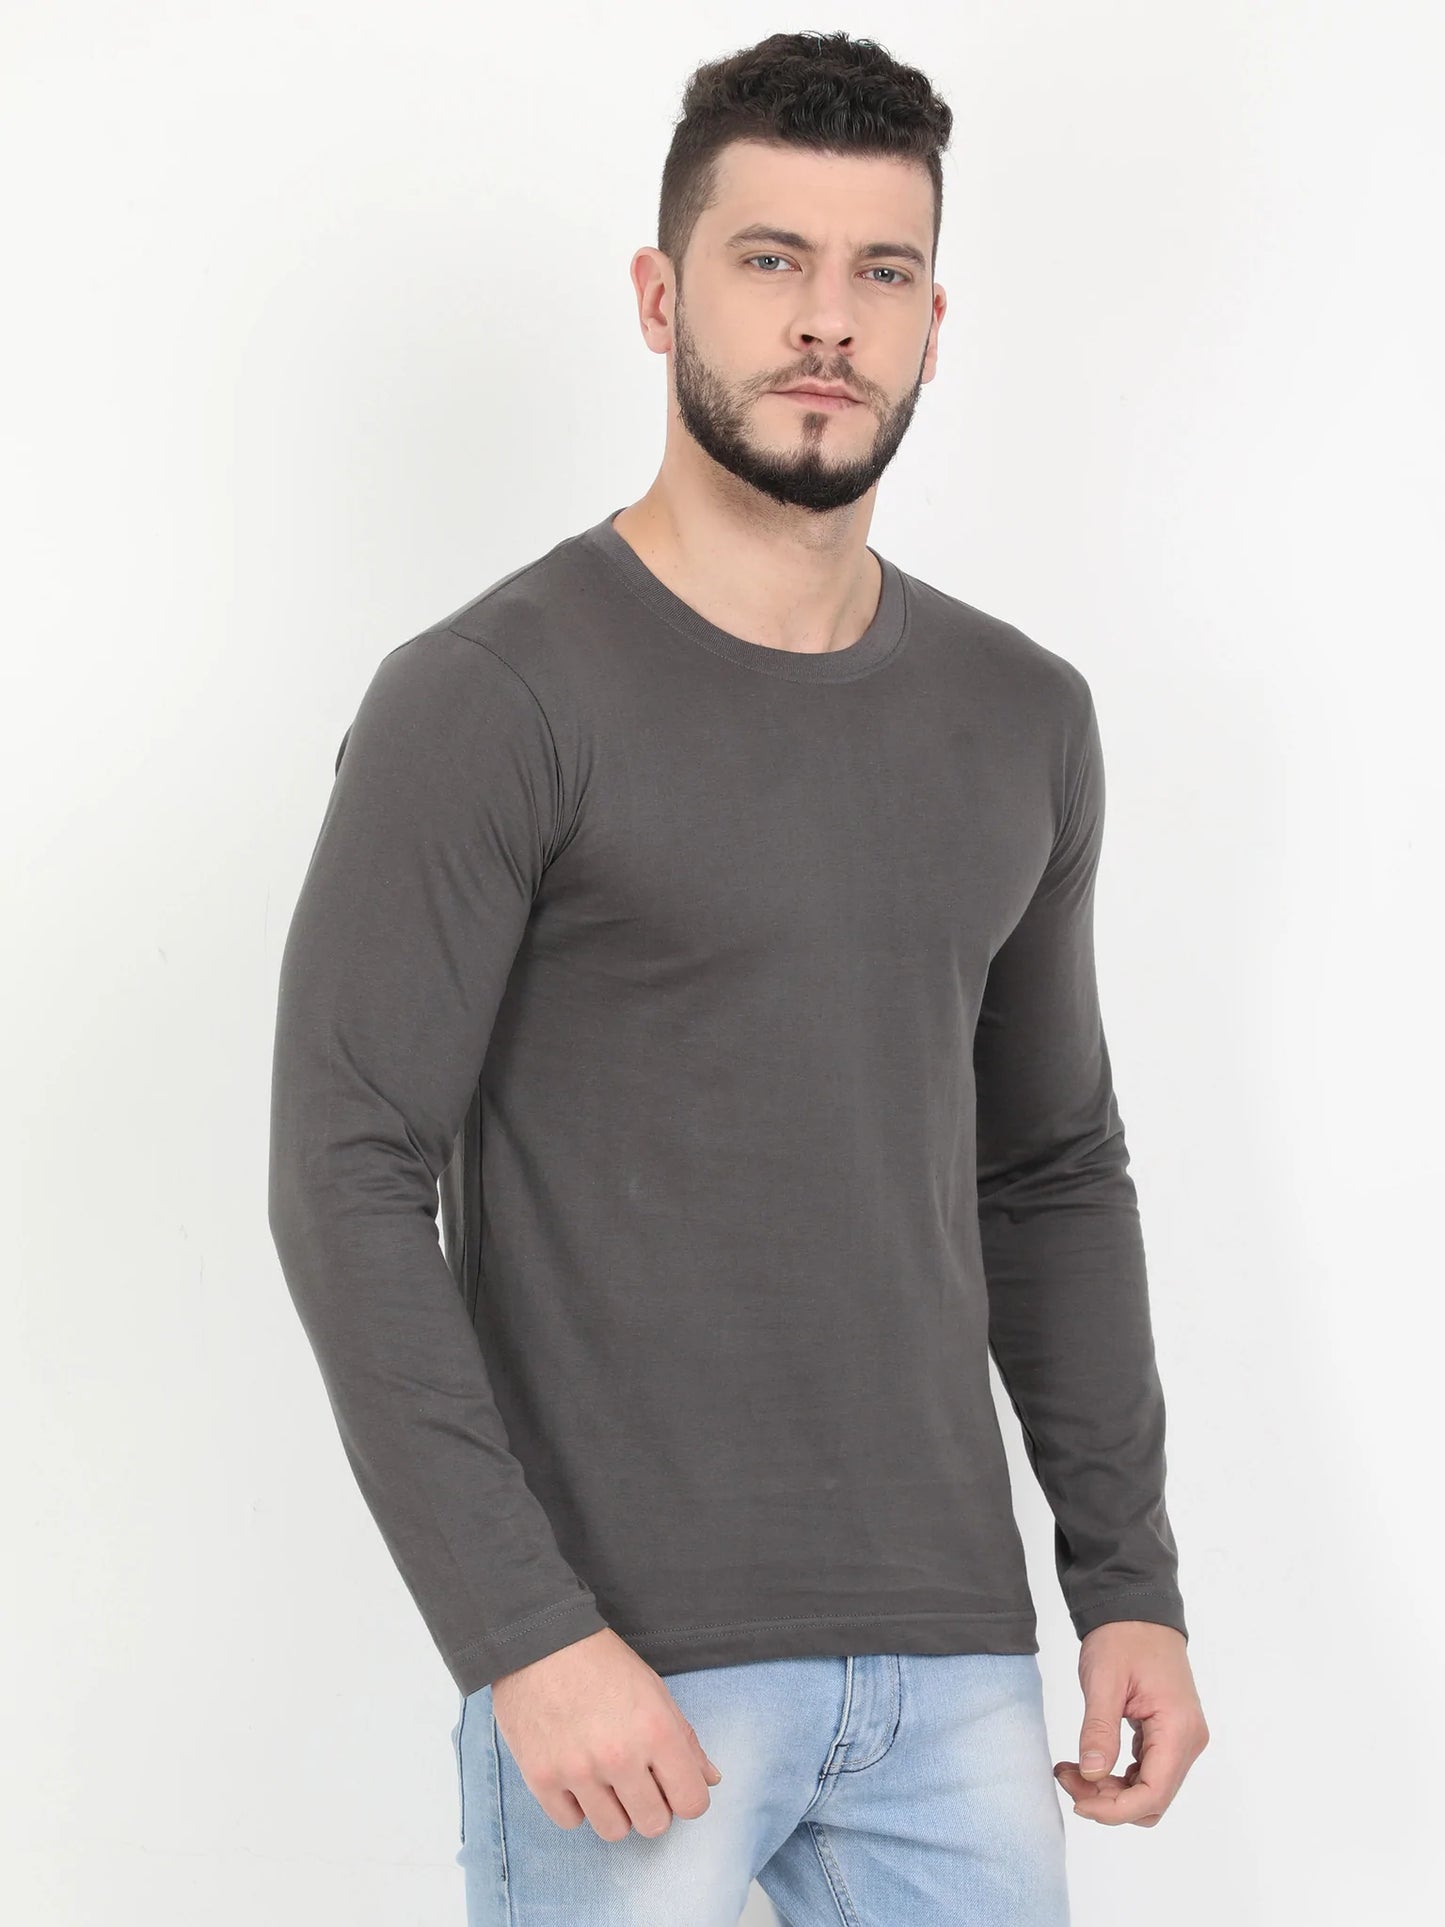 Men's Cotton Plain Round Neck Full Sleeve Steel Grey Color T-Shirt